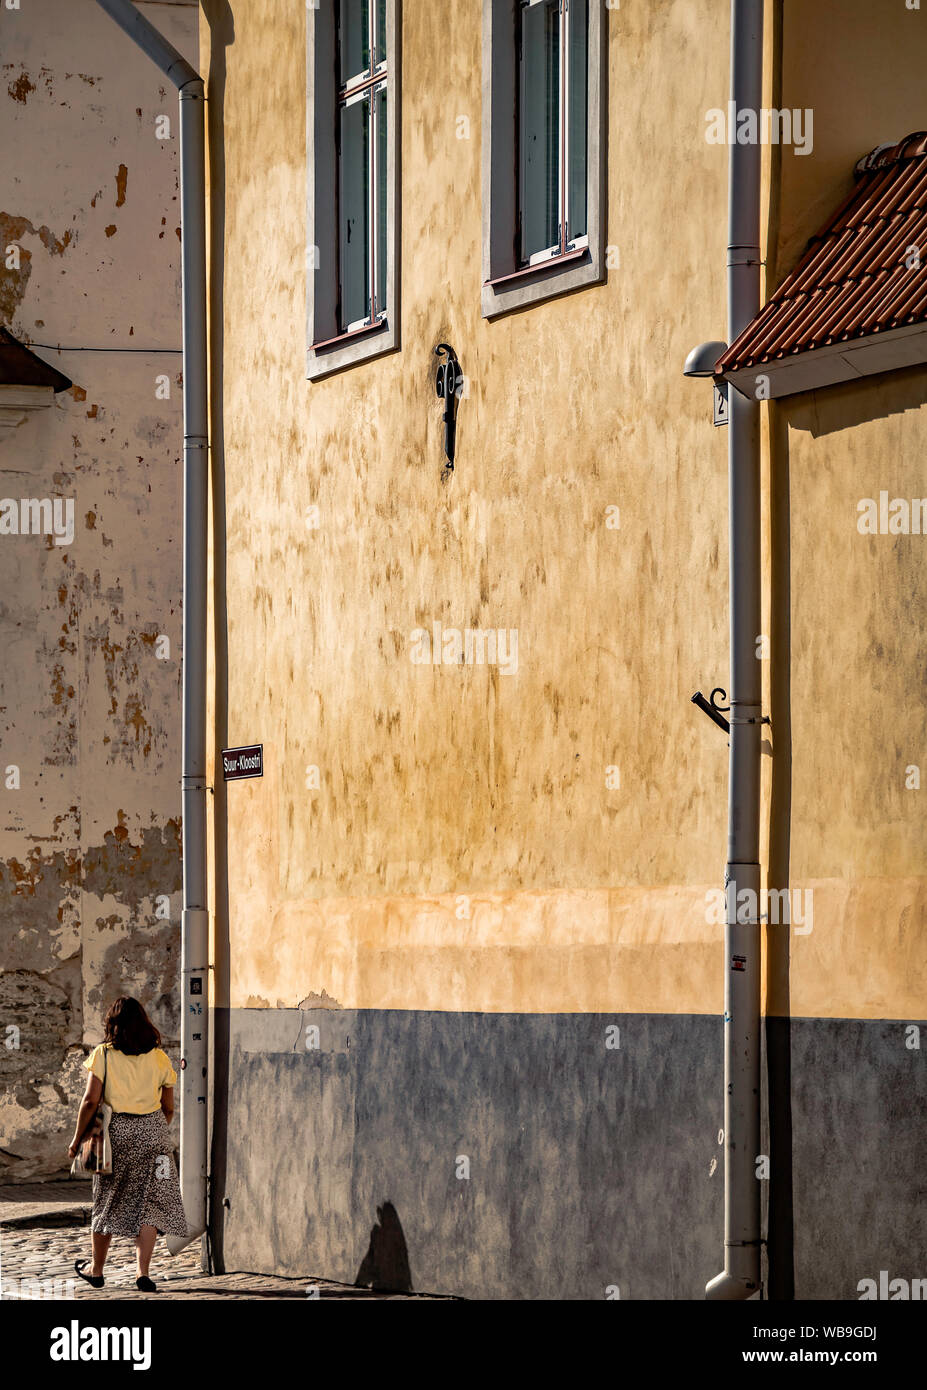 Tallinn, Estonia. Aug 13, 2019: Woman with matching colors walking in beautiful Old Town of Tallinn, Estonia Stock Photo